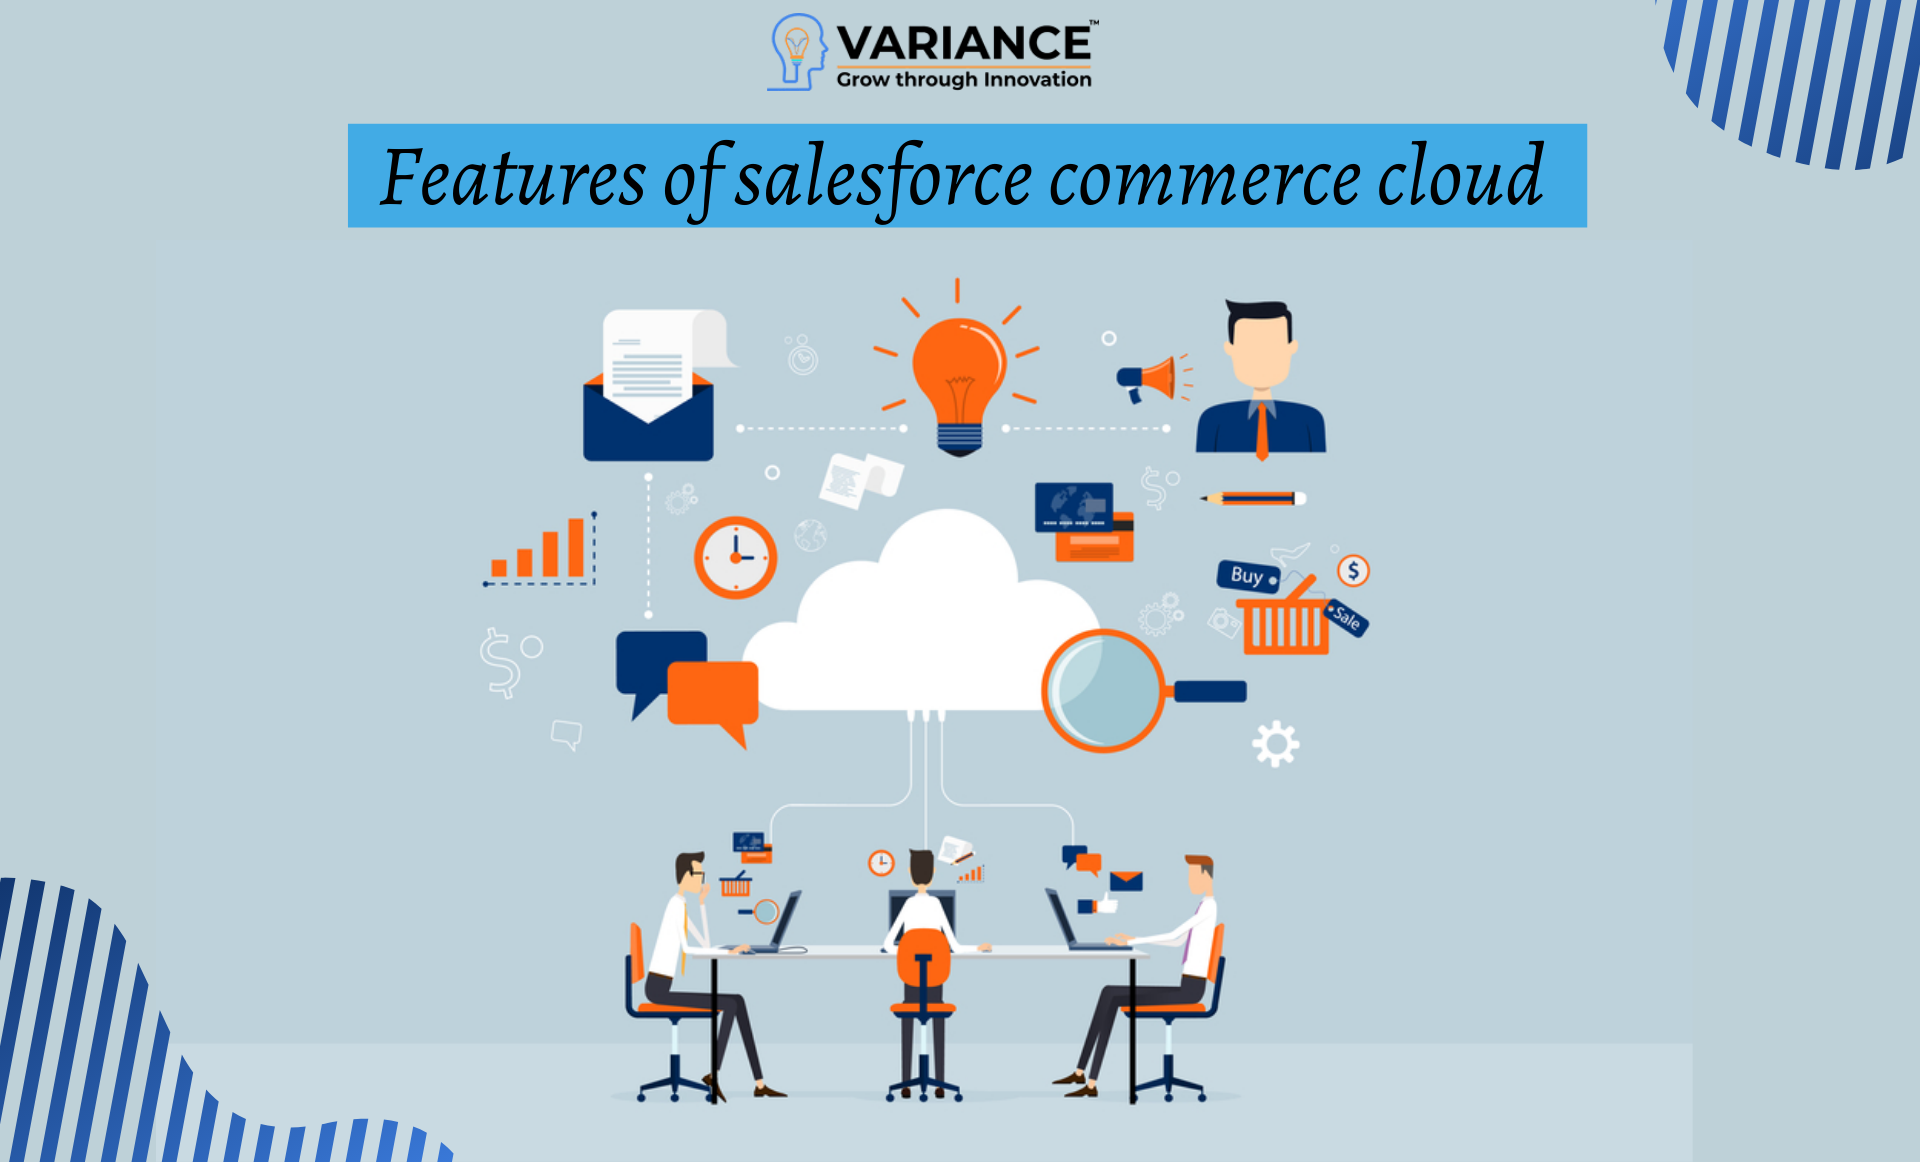 Features of Salesforce Commerce Cloud